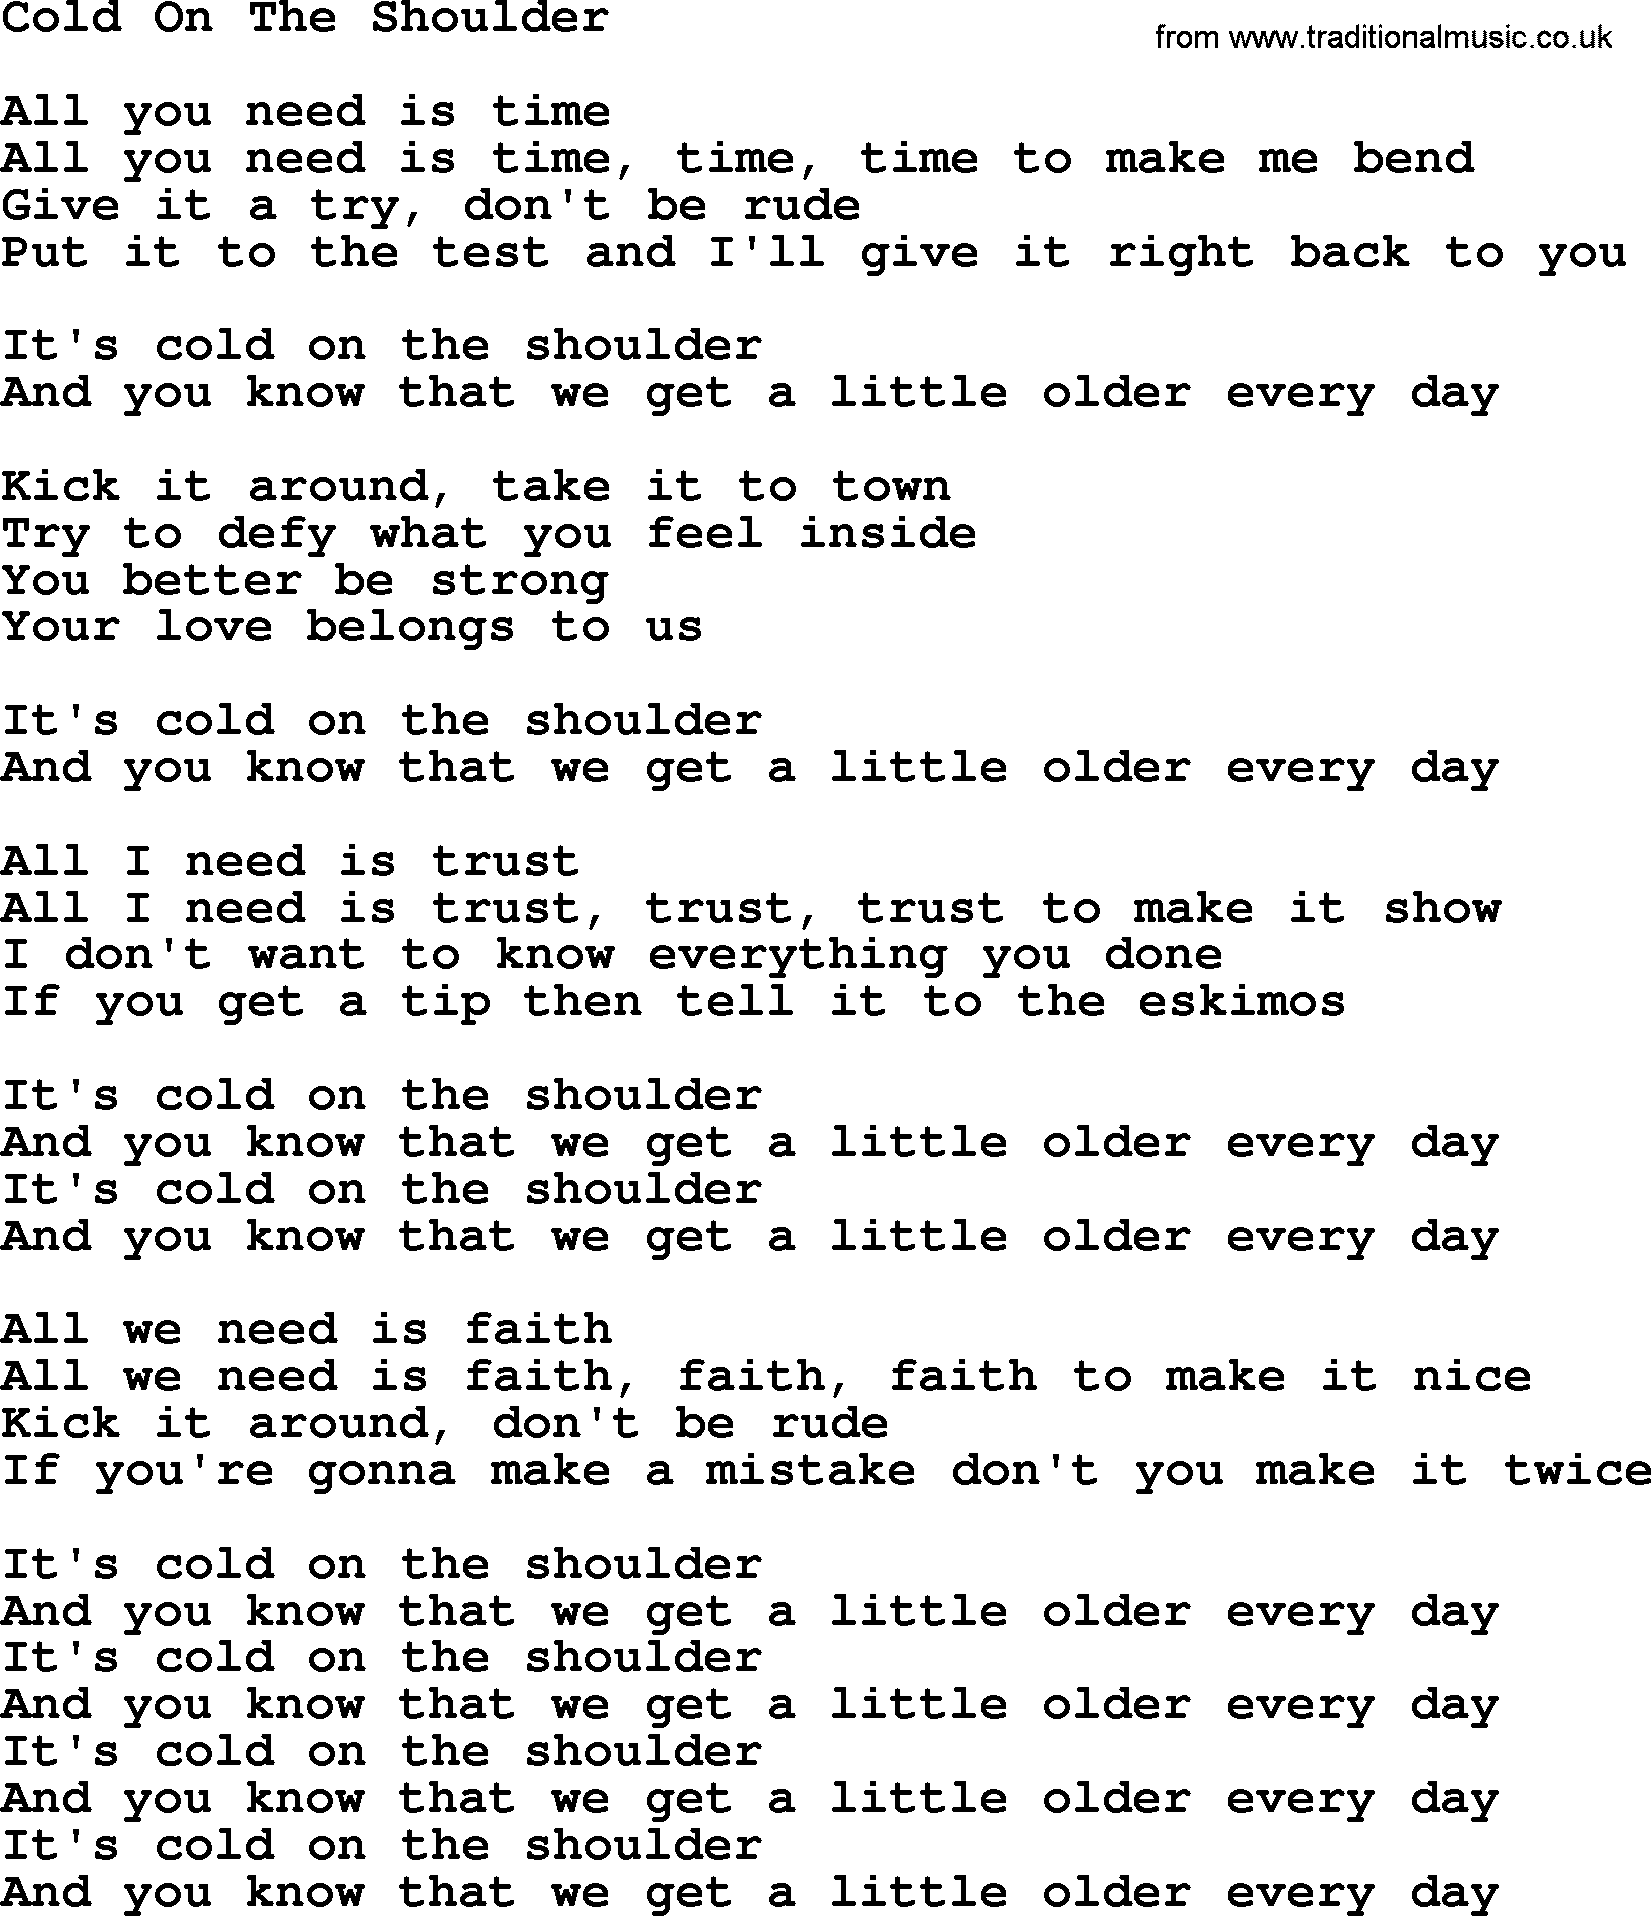 Gordon Lightfoot song Cold On The Shoulder, lyrics